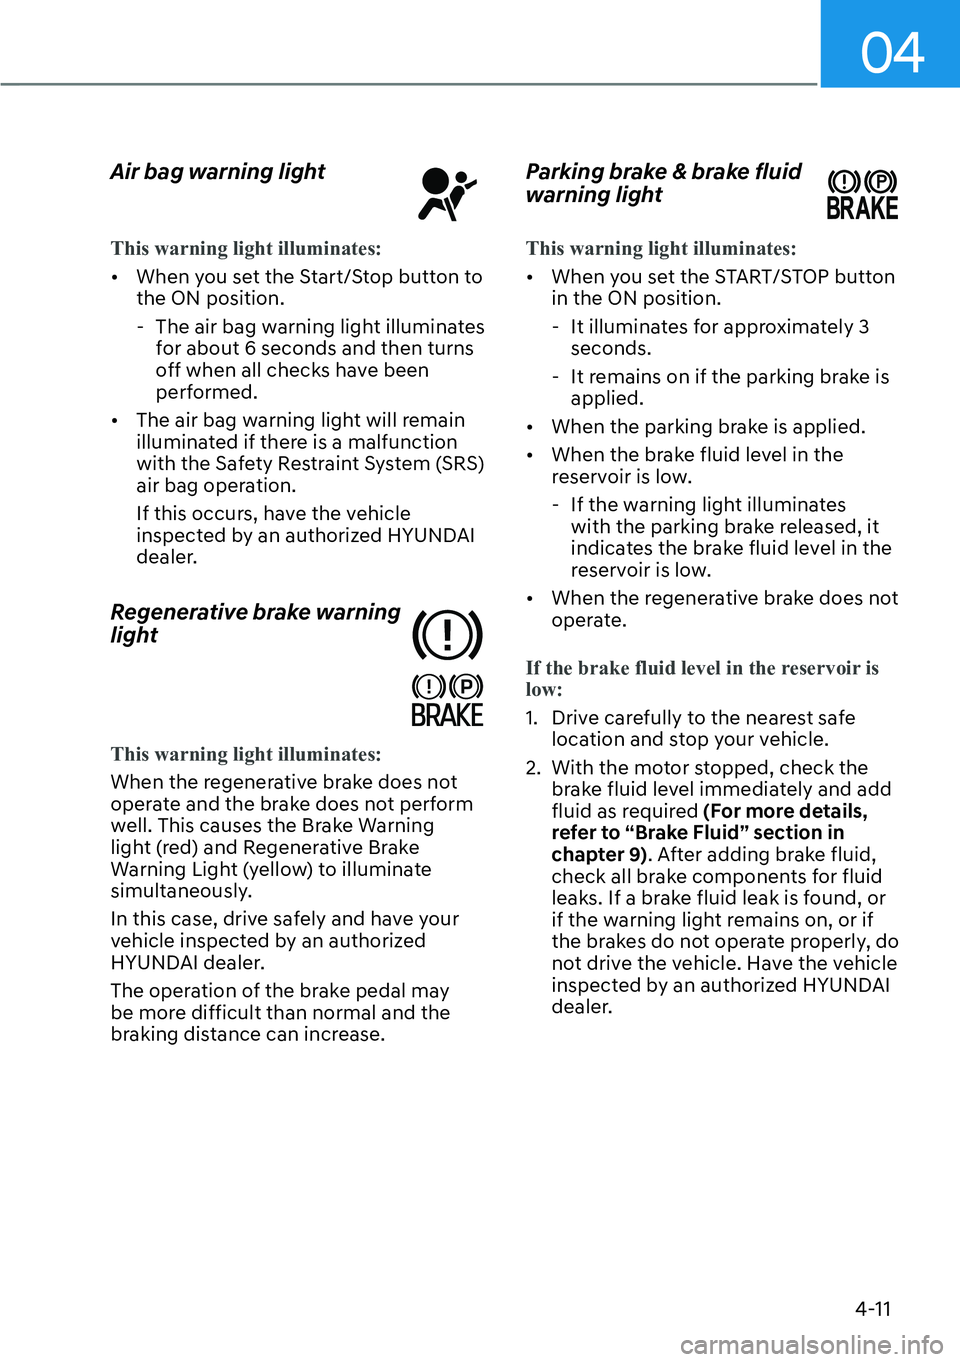 HYUNDAI IONIQ 5 2022  Owners Manual 04
4-11
Air bag warning light
This warning light illuminates:
[�When you set the Start/Stop button to 
the ON position.
  - The air bag warning light illuminates 
for about 6 seconds and then turns 